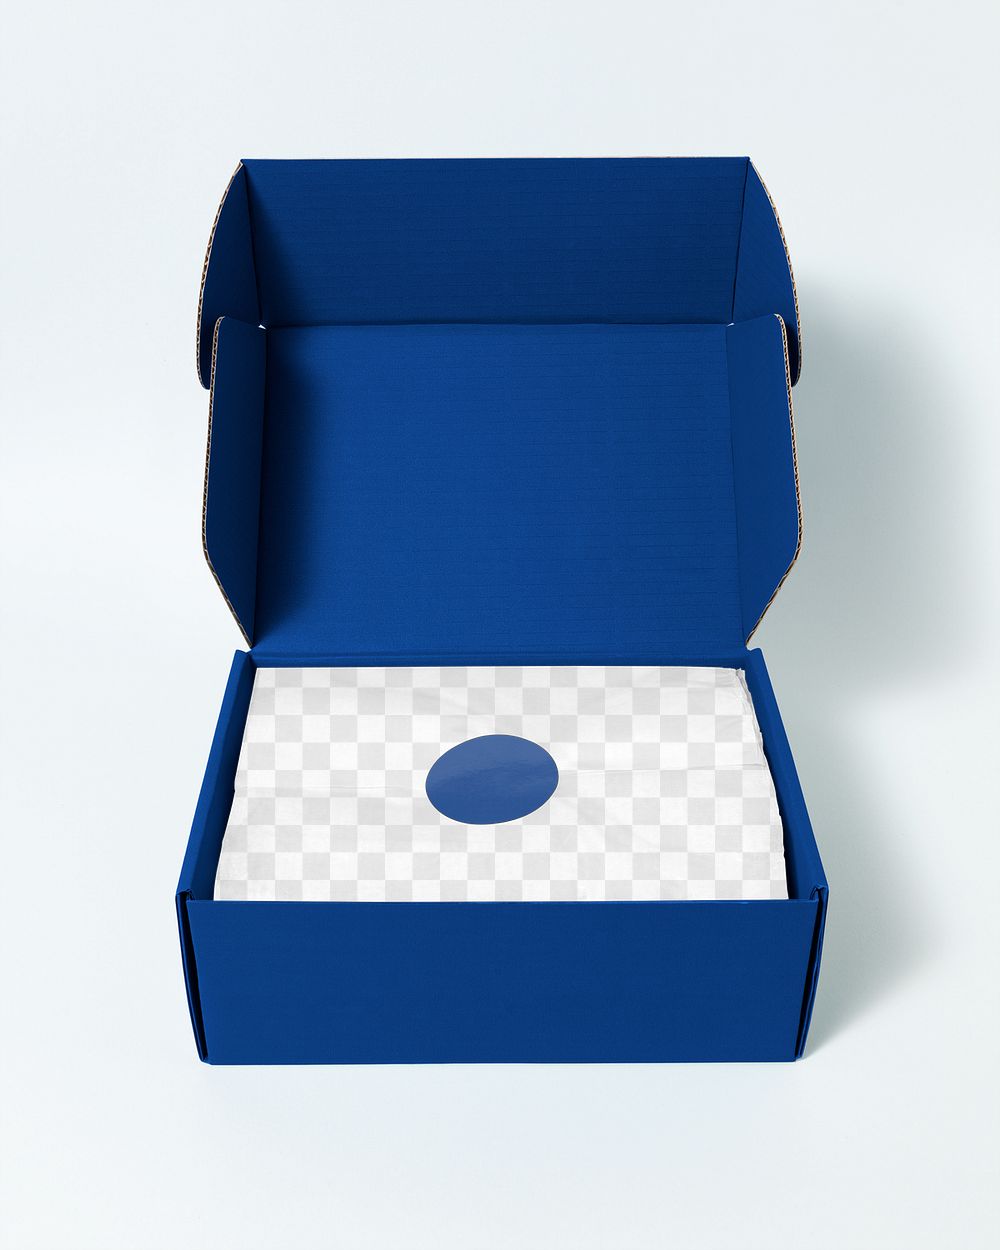 Branding mockup png, transparent wrap paper in blue parcel box, online business concept